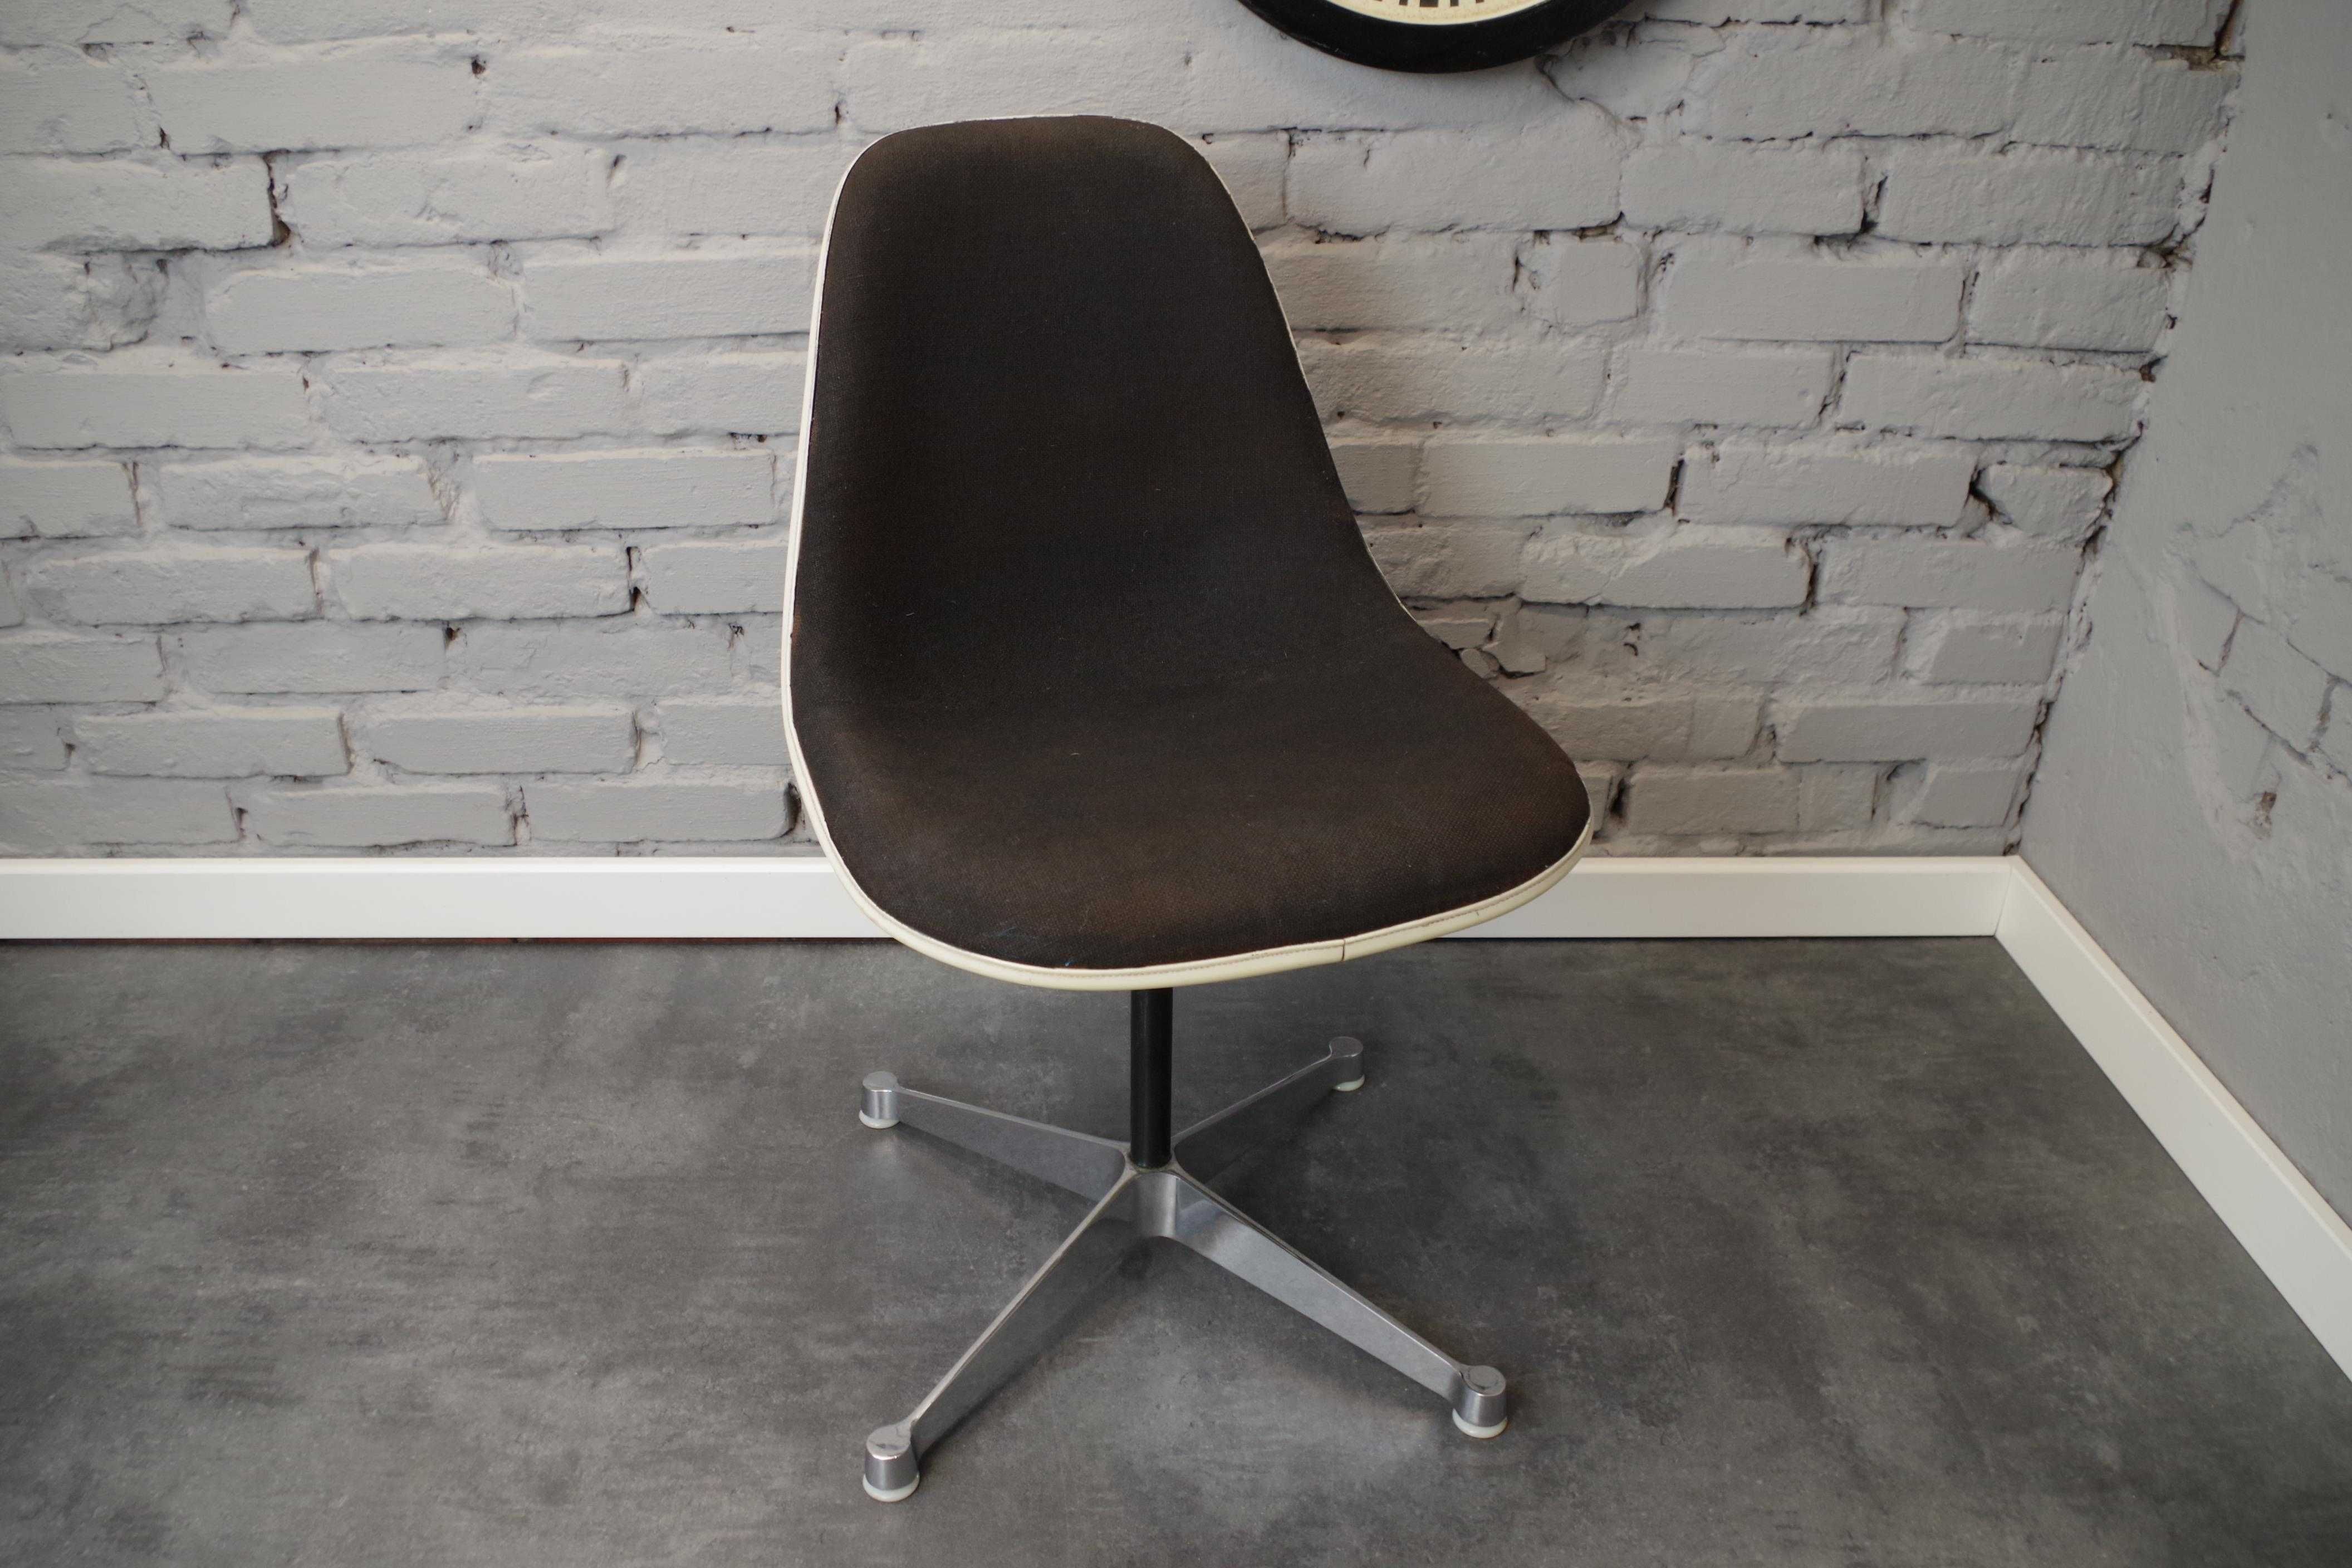 Krzesło obrotowe proj. Charles Eames dla Herman Miller lata 60